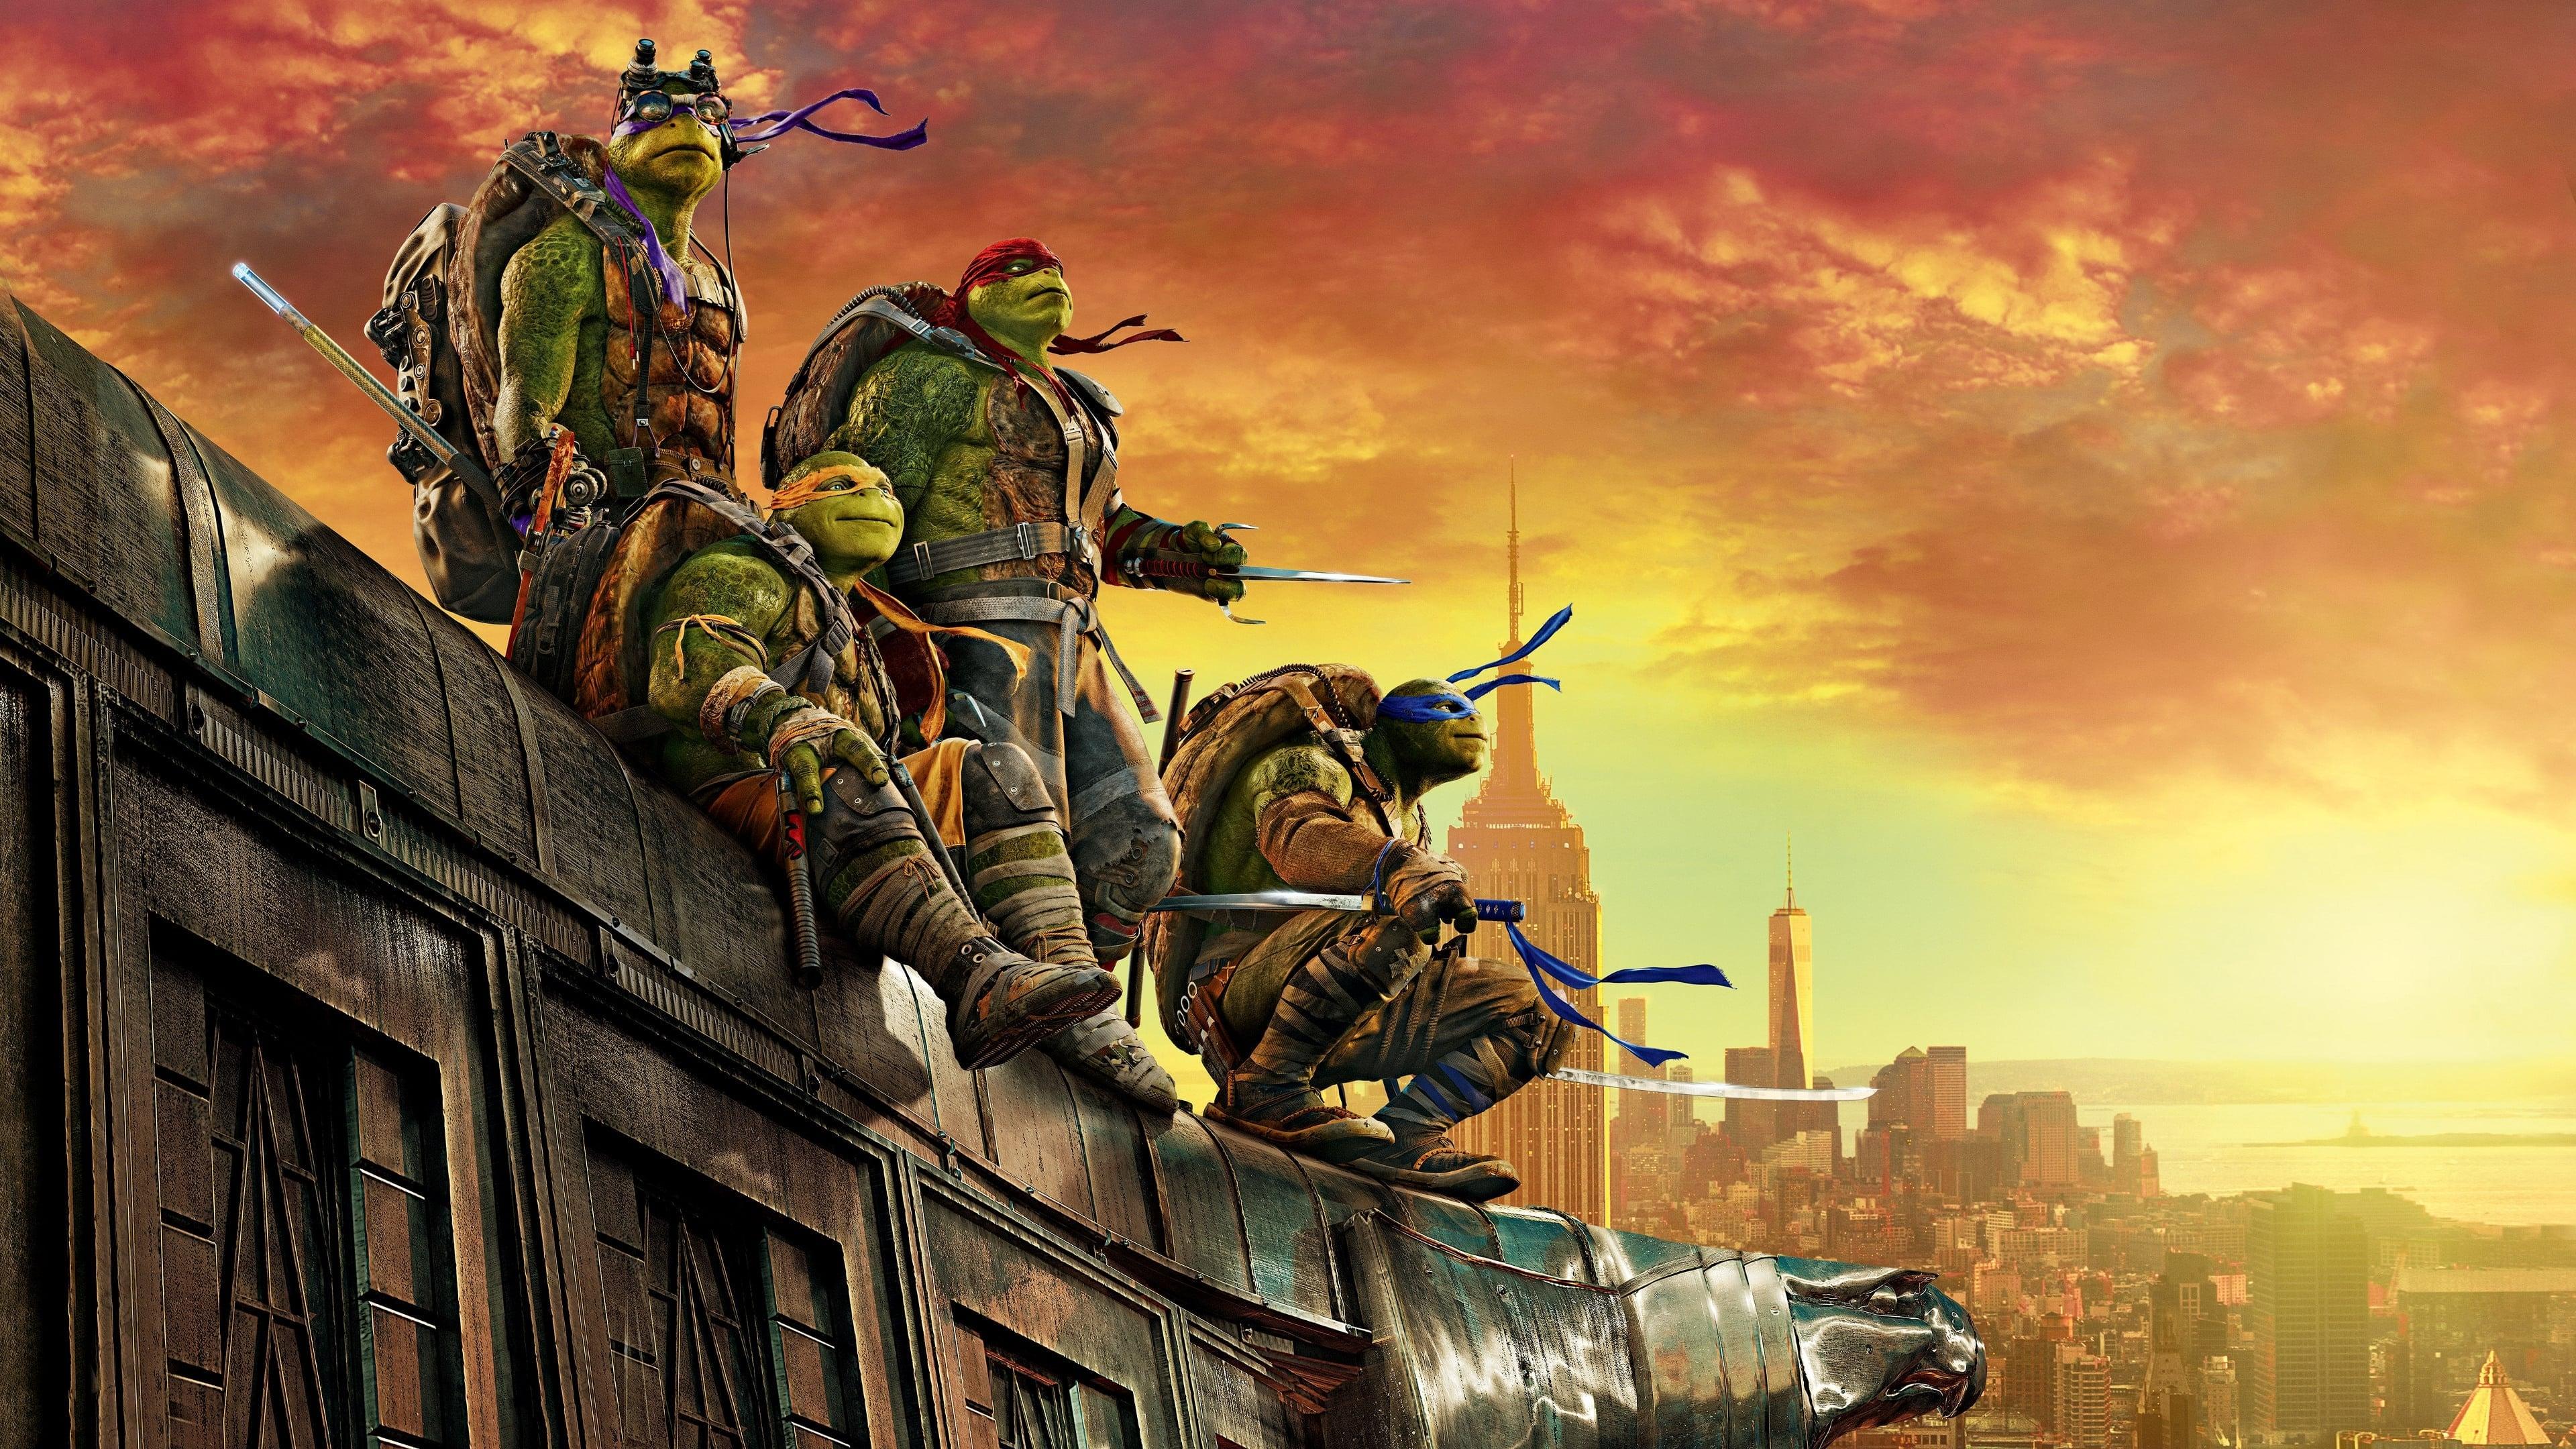 Teenage Mutant Ninja Turtles: Out of the Shadows backdrop